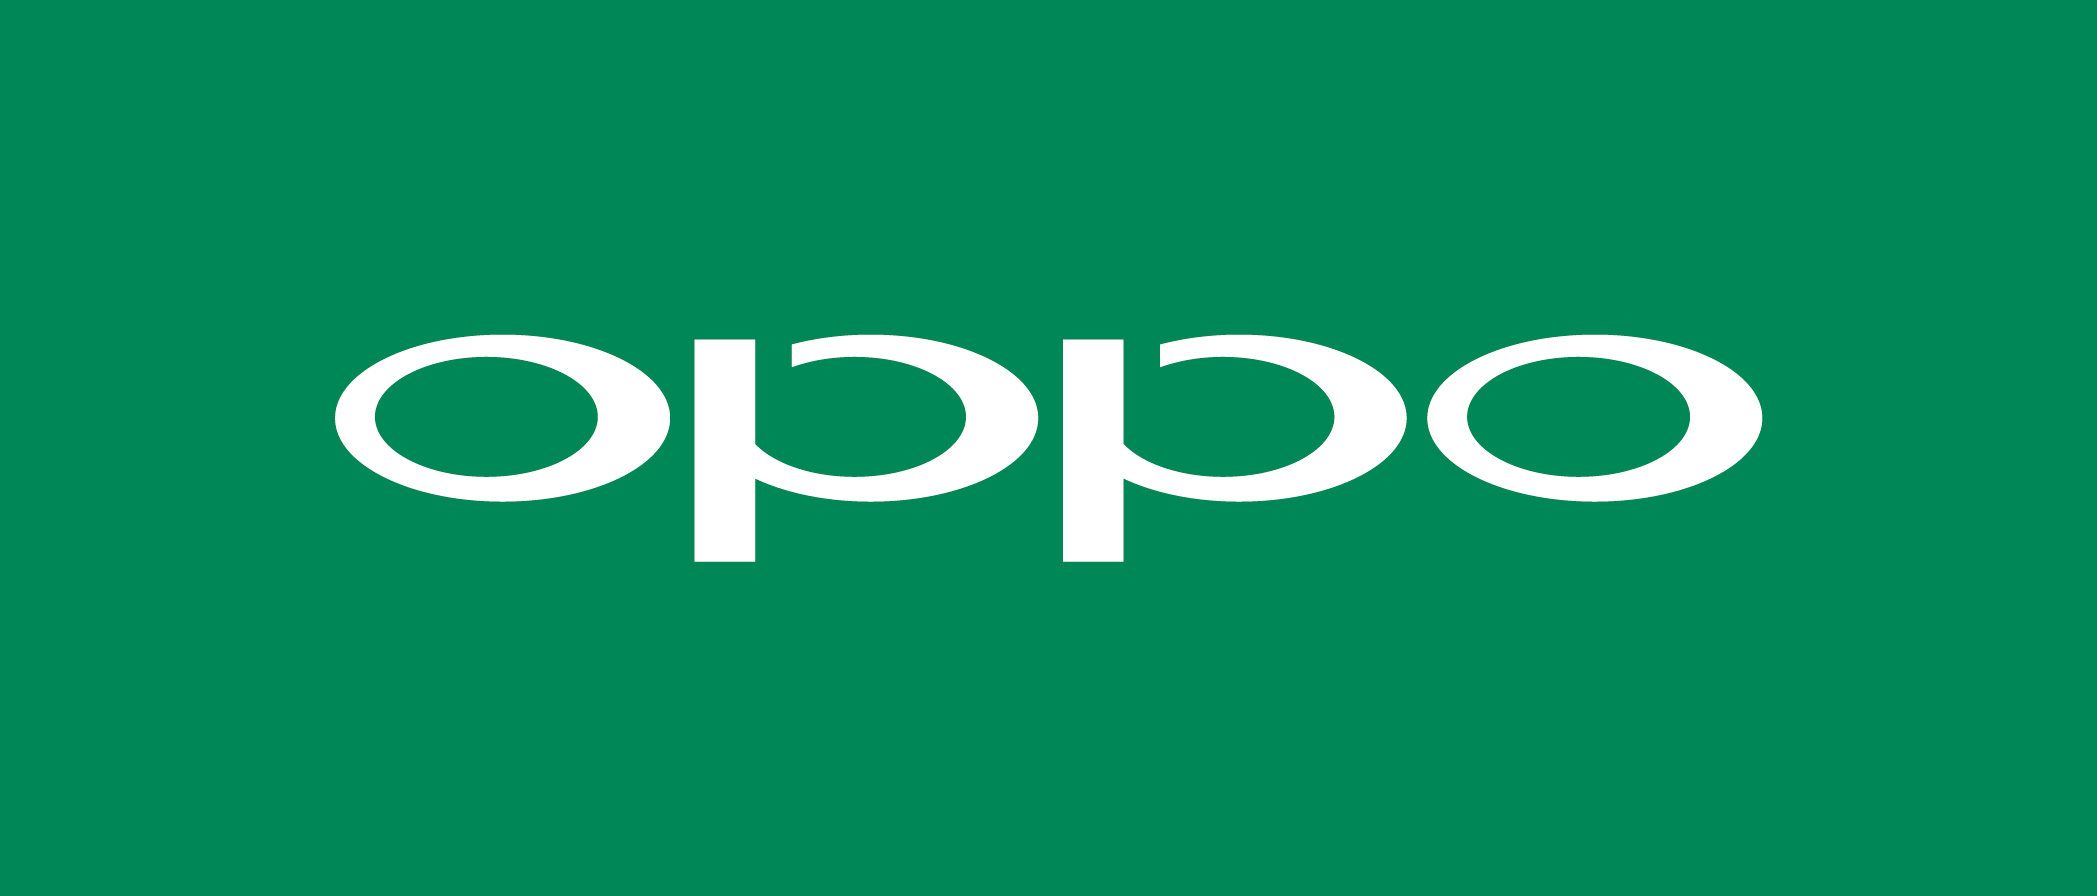 OPPO_Green Logobox_Pantone_Hres.png